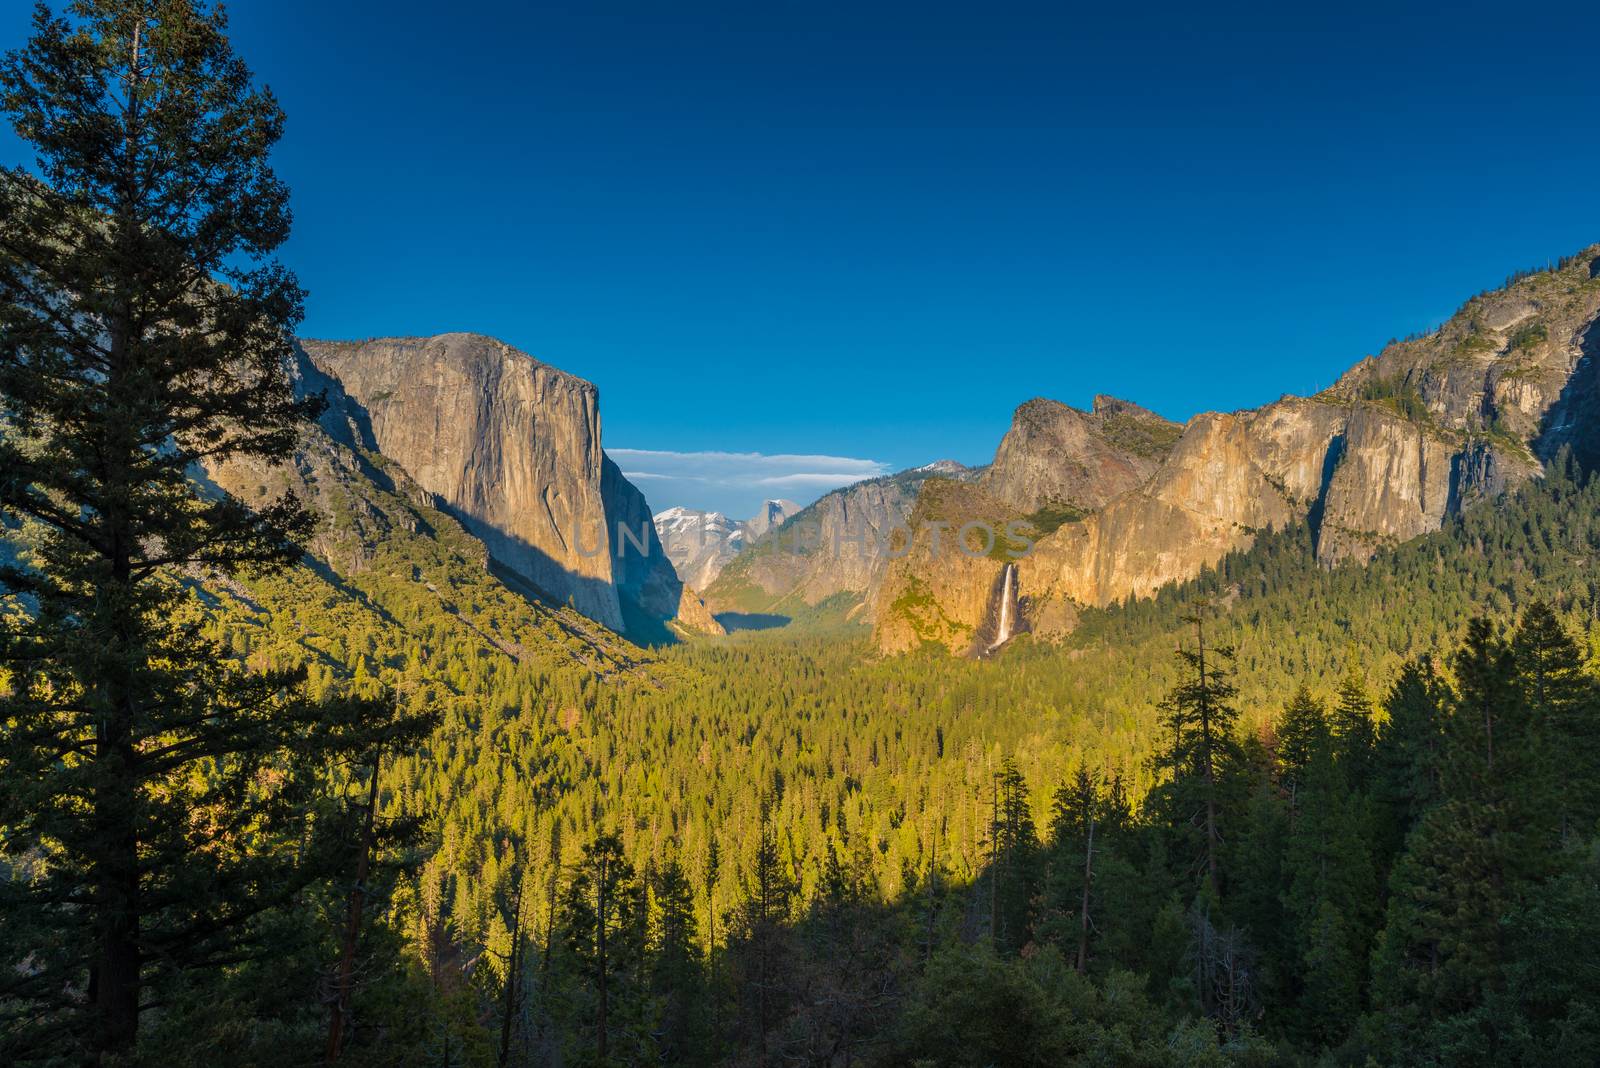 Yosemite Valley at Sunset by patrickstock